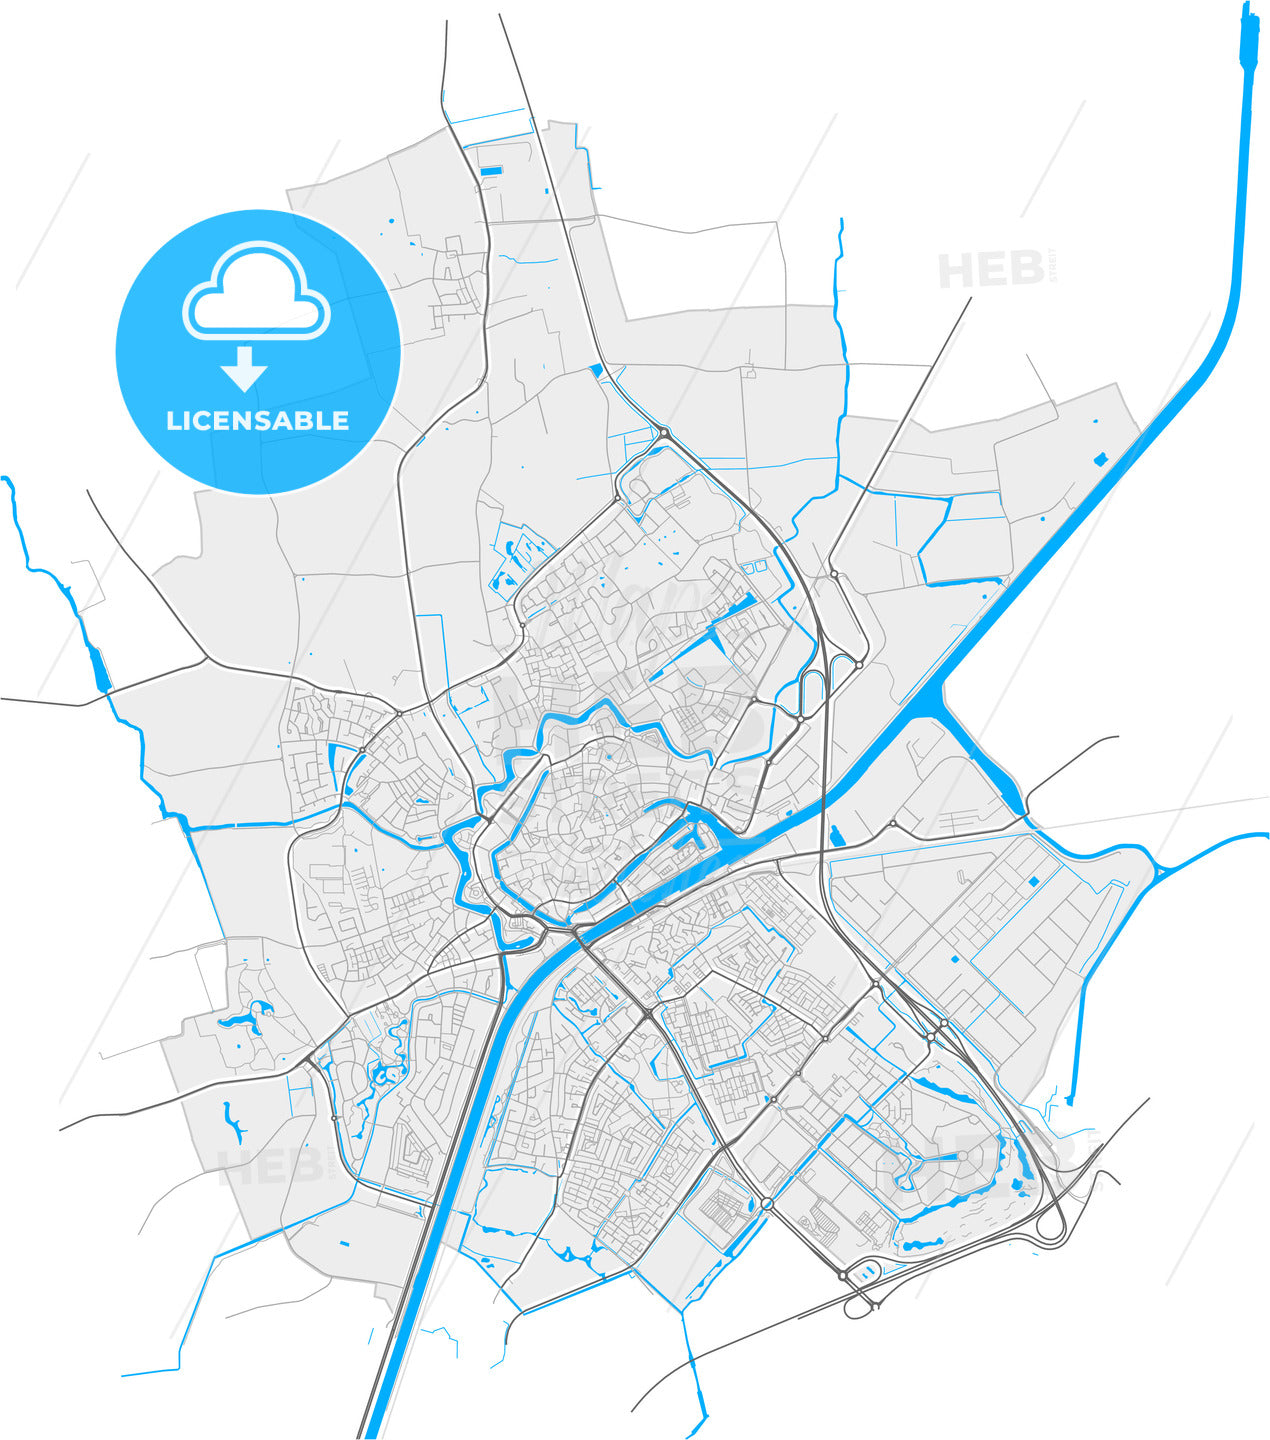 Middelburg, Zeeland, Netherlands, high quality vector map